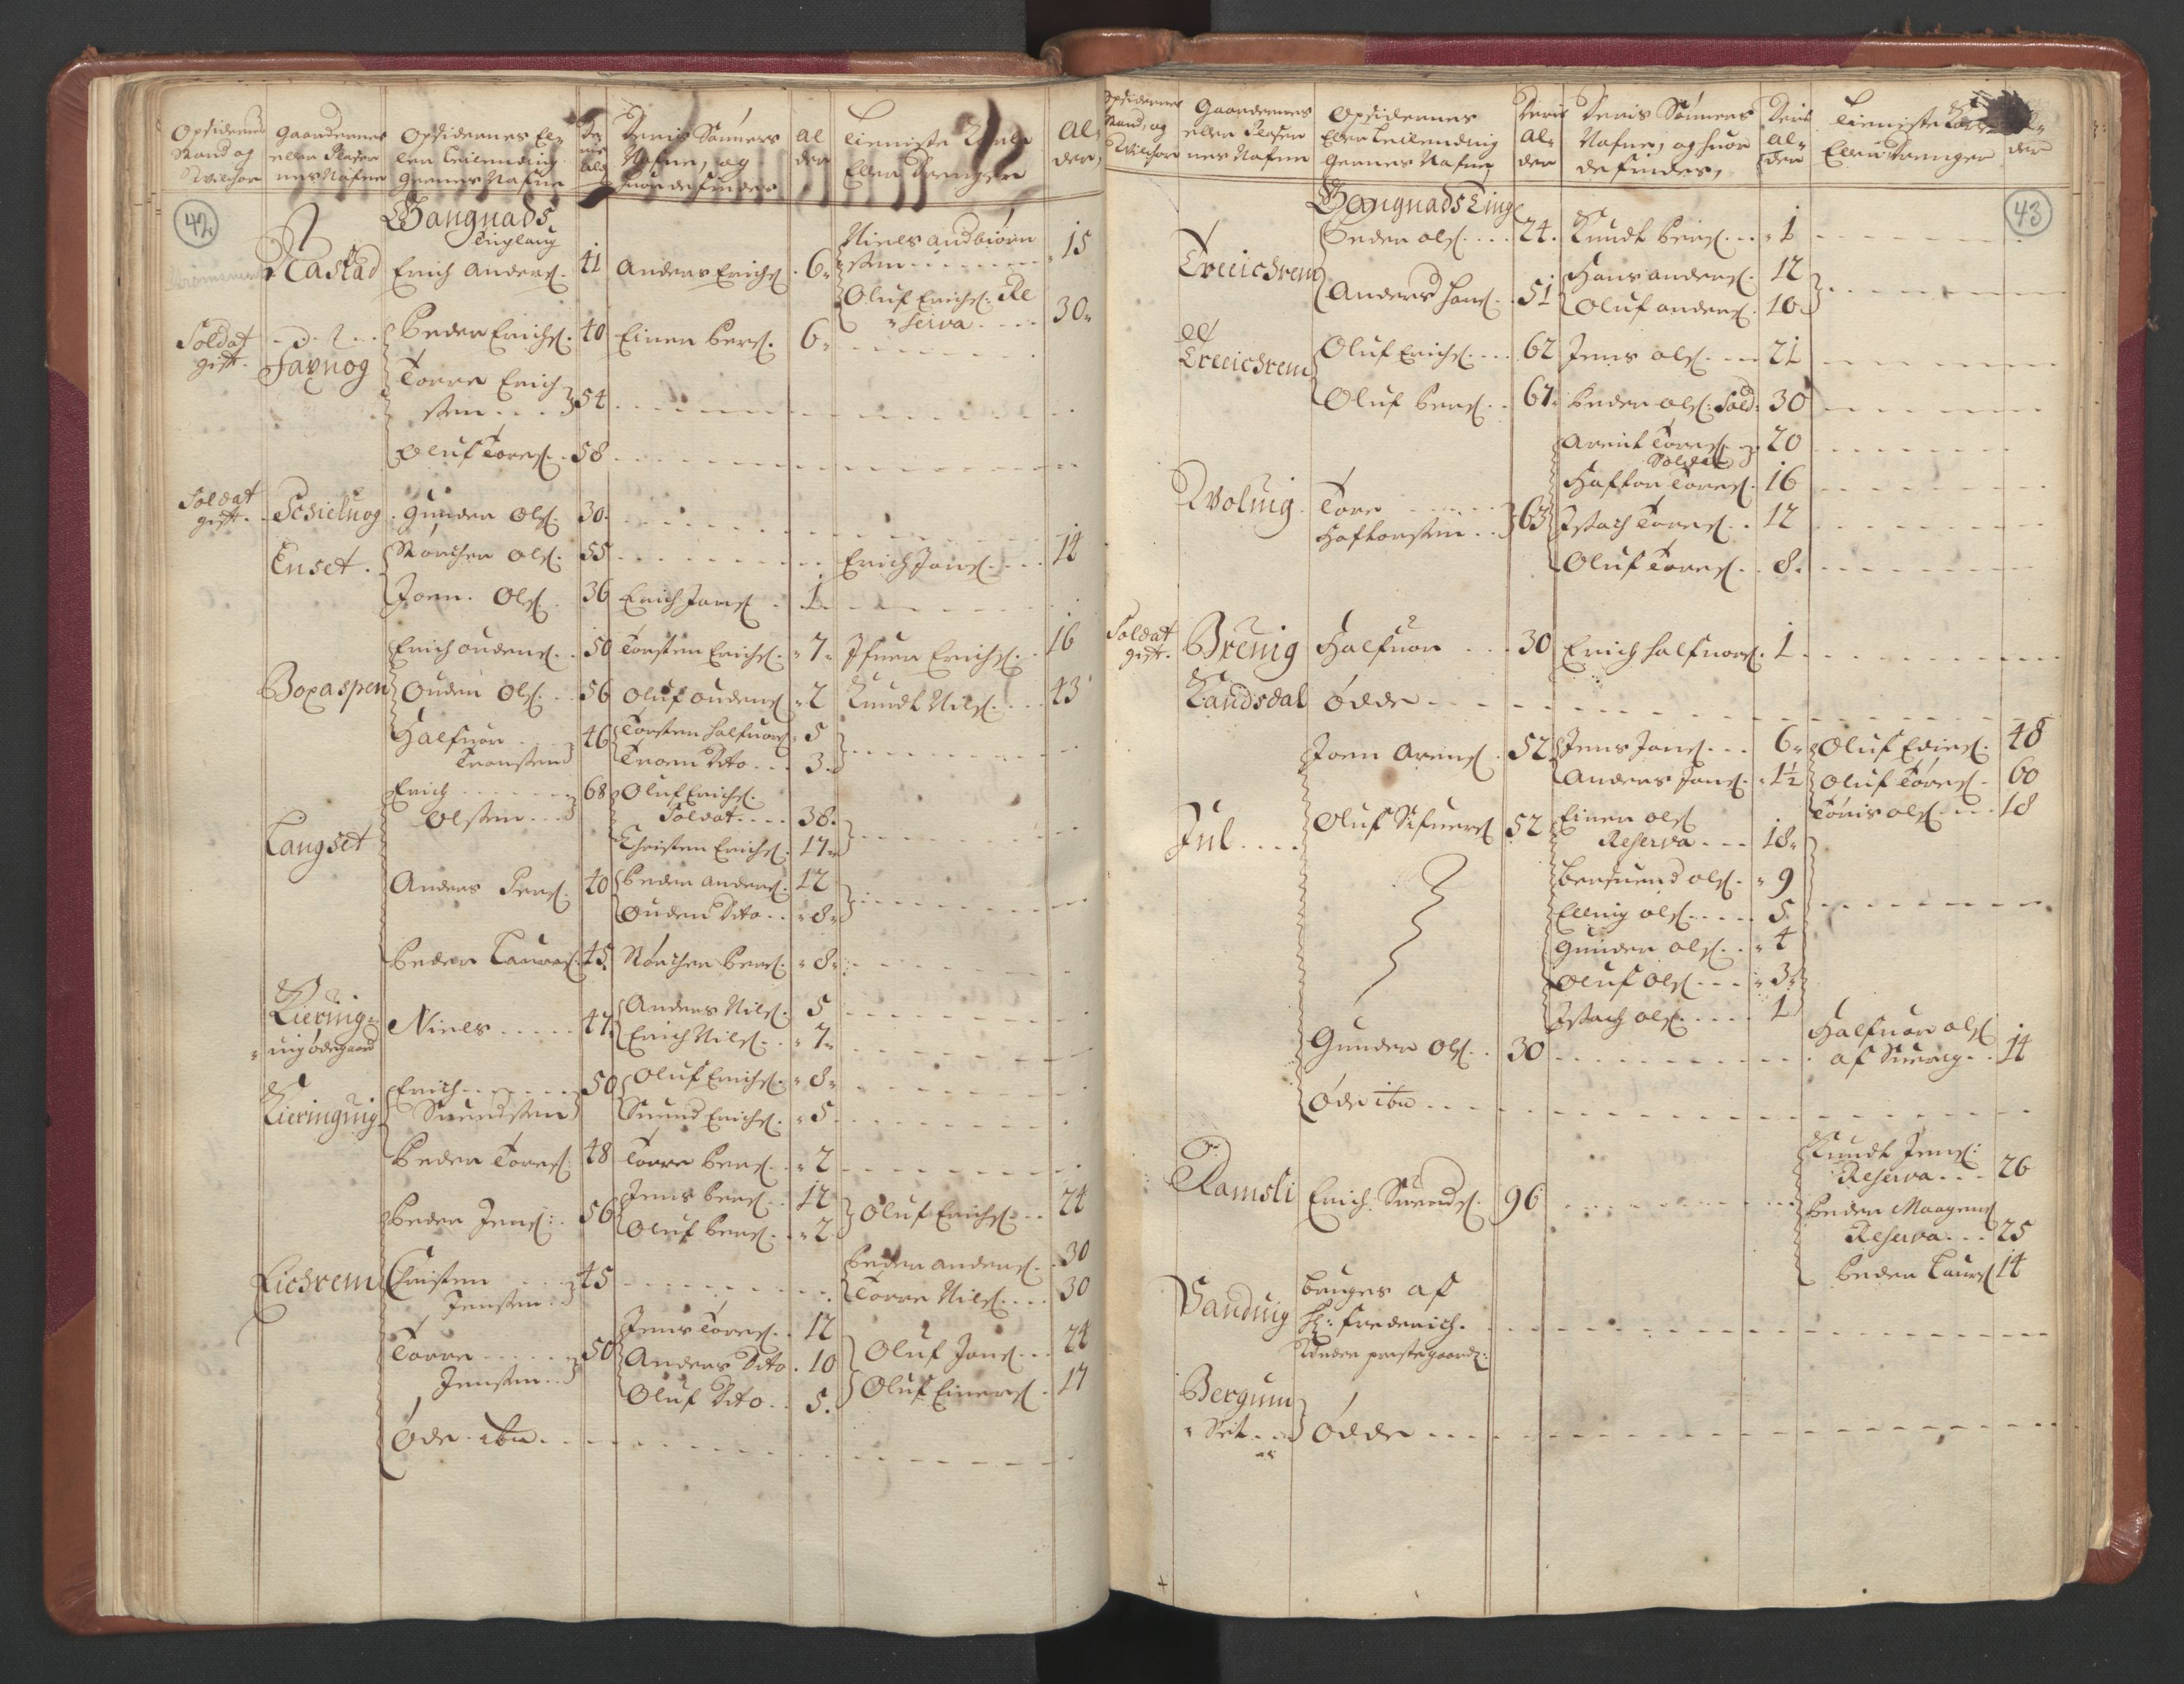 RA, Manntallet 1701, nr. 11: Nordmøre fogderi og Romsdal fogderi, 1701, s. 42-43